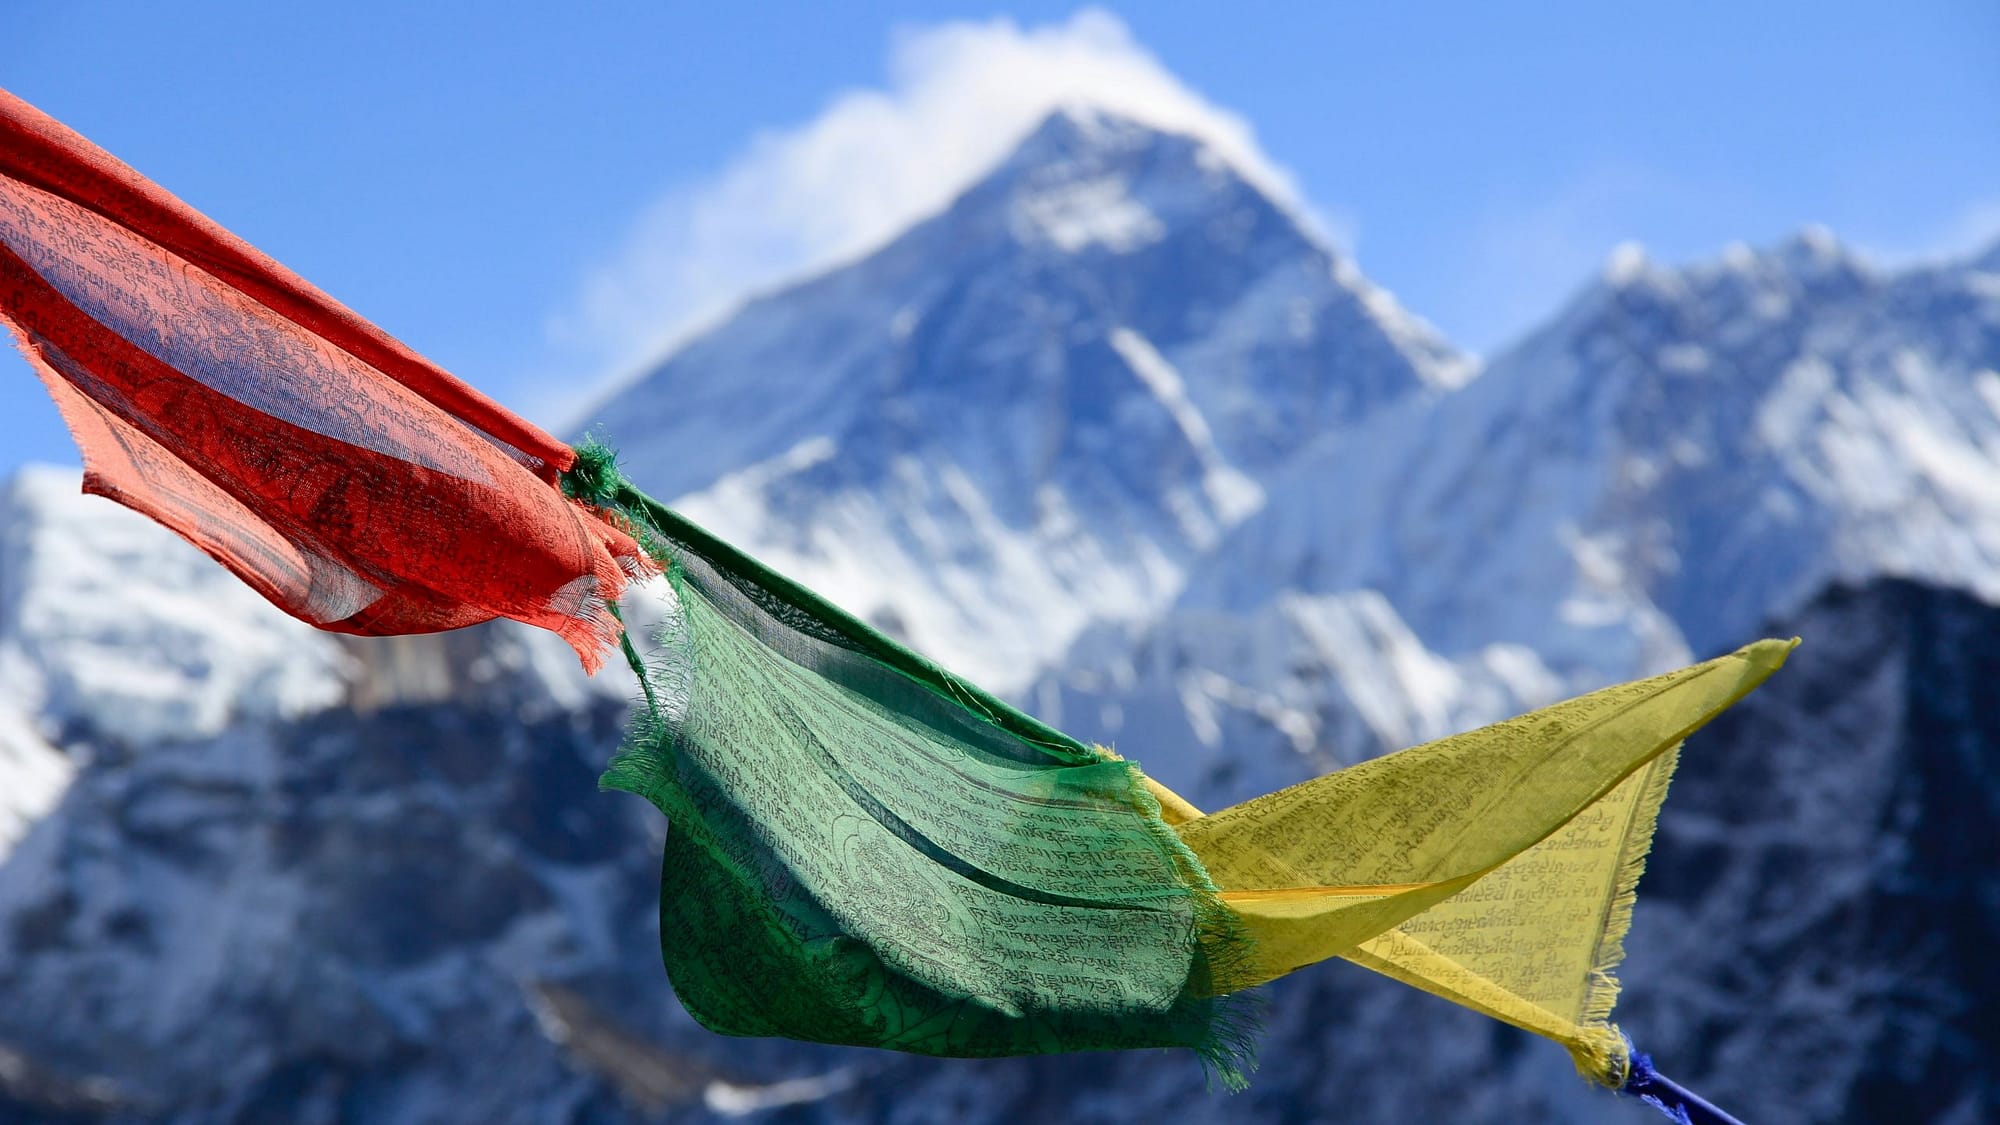 Climbing Everest: Still a Peak Experience? | Goodness Exchange